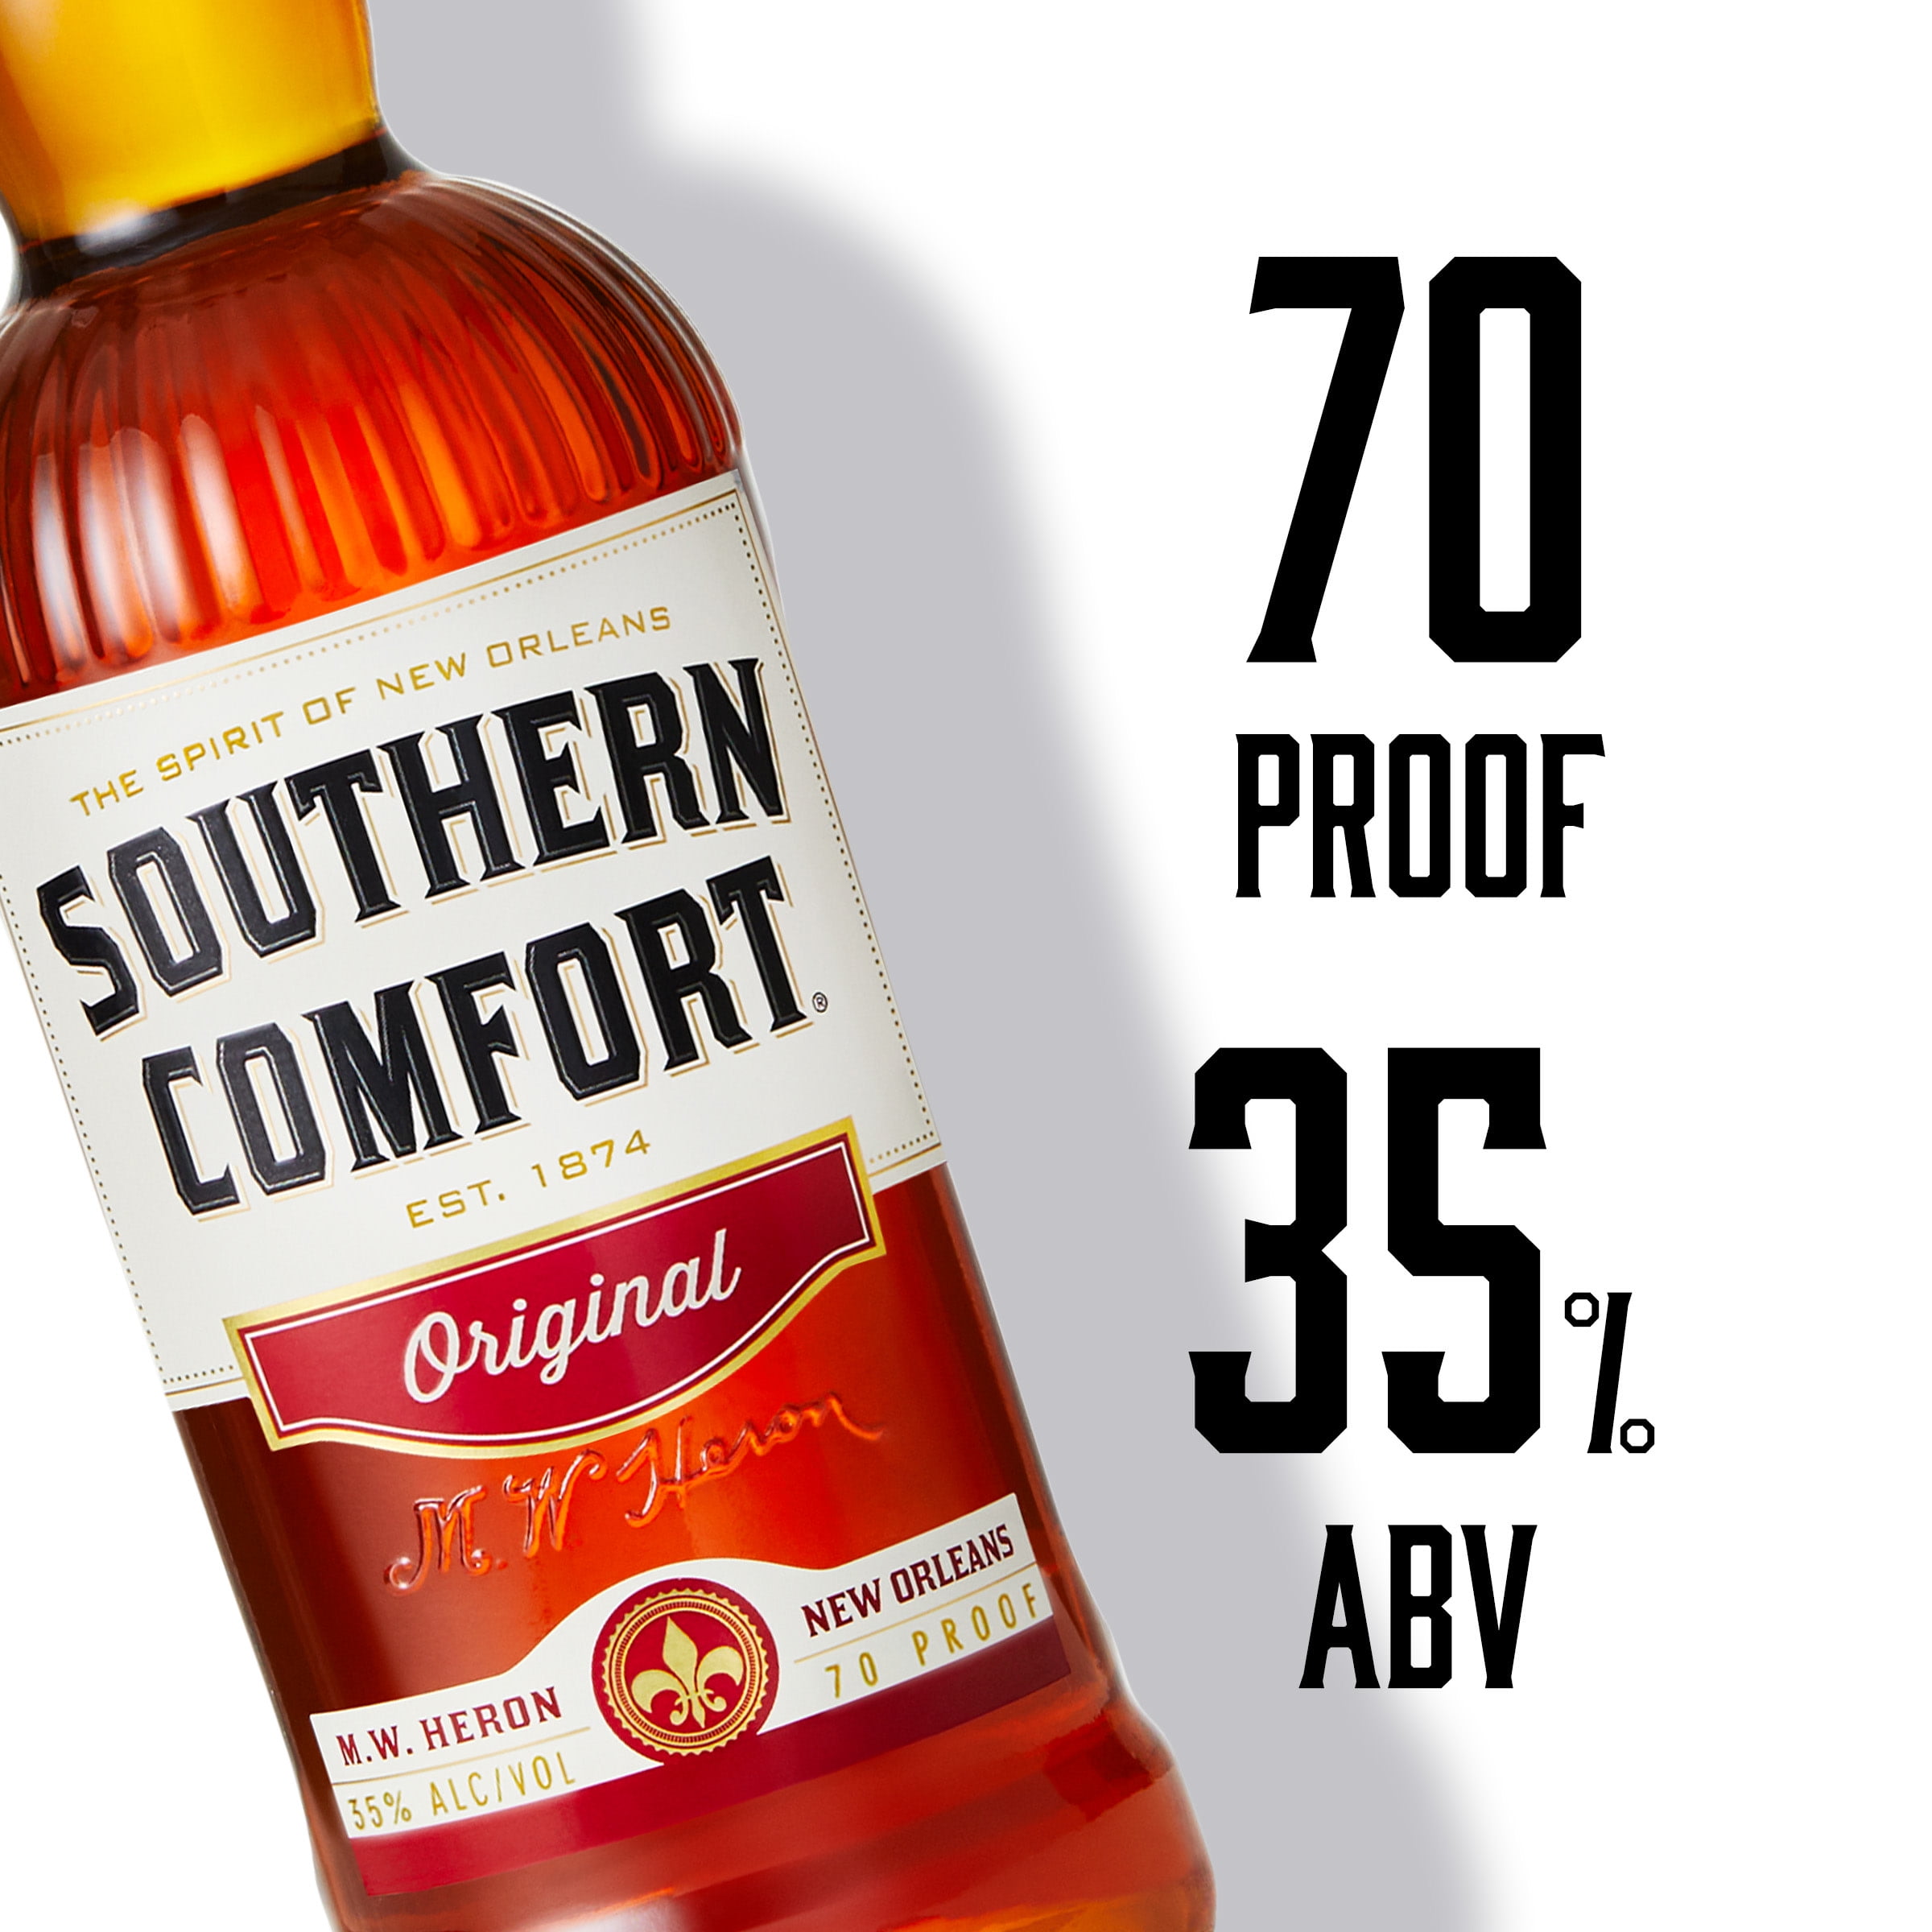 Southern Comfort Original Whiskey, 750ml Liquor, 35% Alcohol 